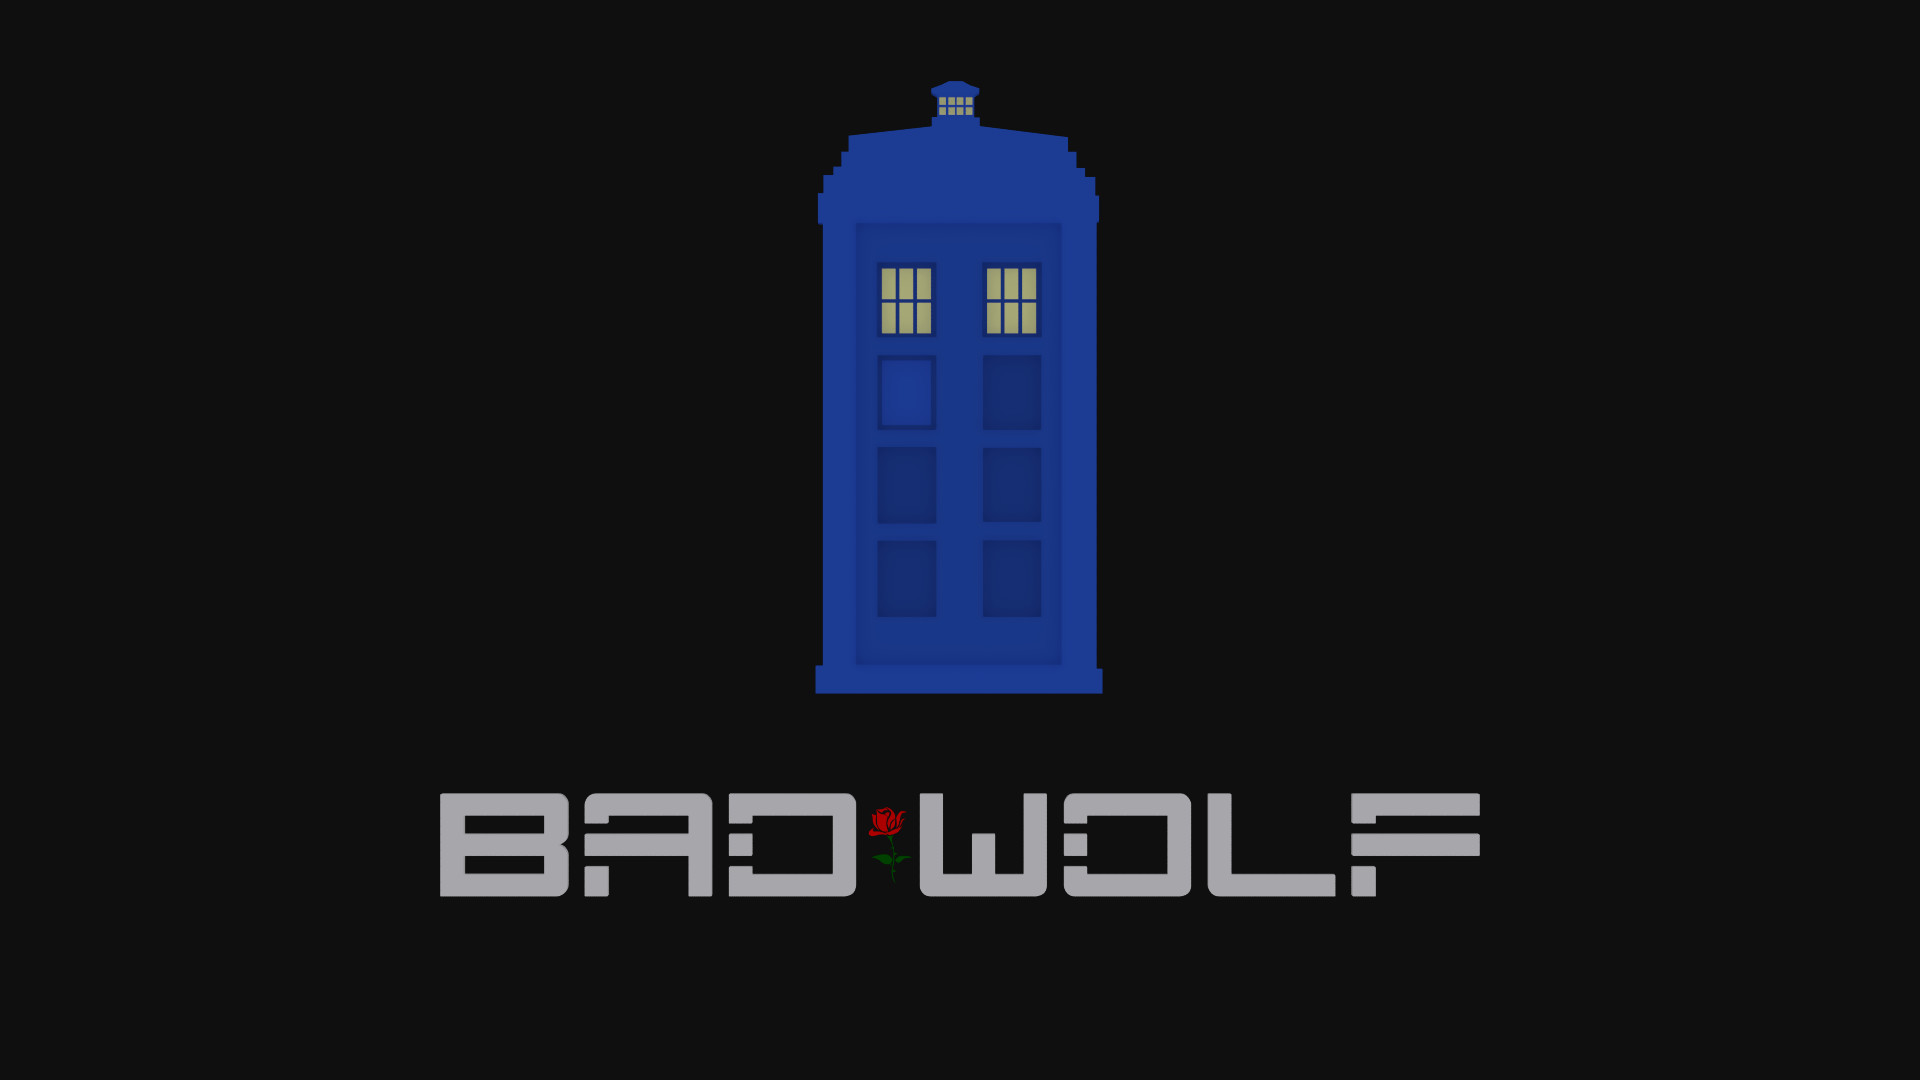 1920x1080 Doctor Who Rose Bad Wolf wallpaper | Cool Desktop Wallpaper | Pinterest |  Bad wolf, Tardis and Wallpaper